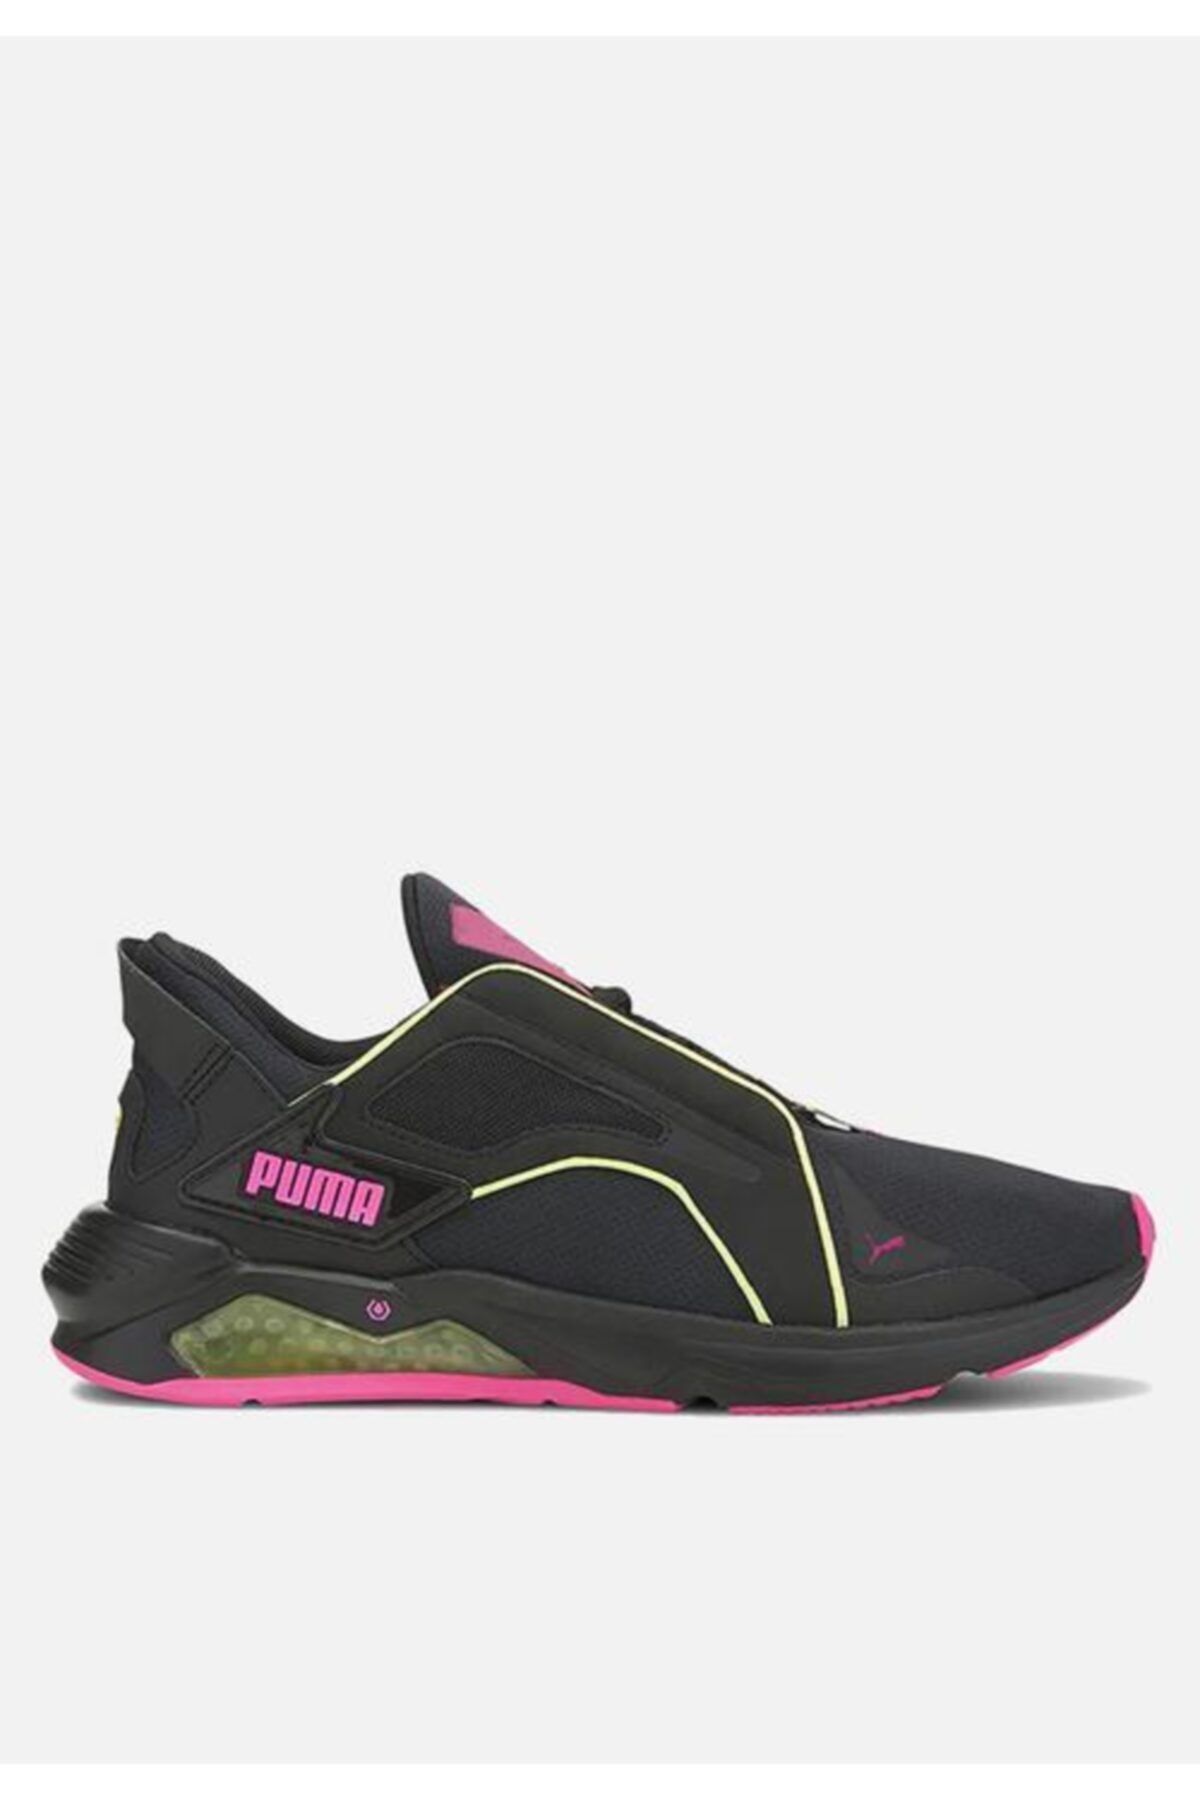 Puma LQDCELL METHOD FM XTREME Siyah Kadın Sneaker Ayakkabı 101119171